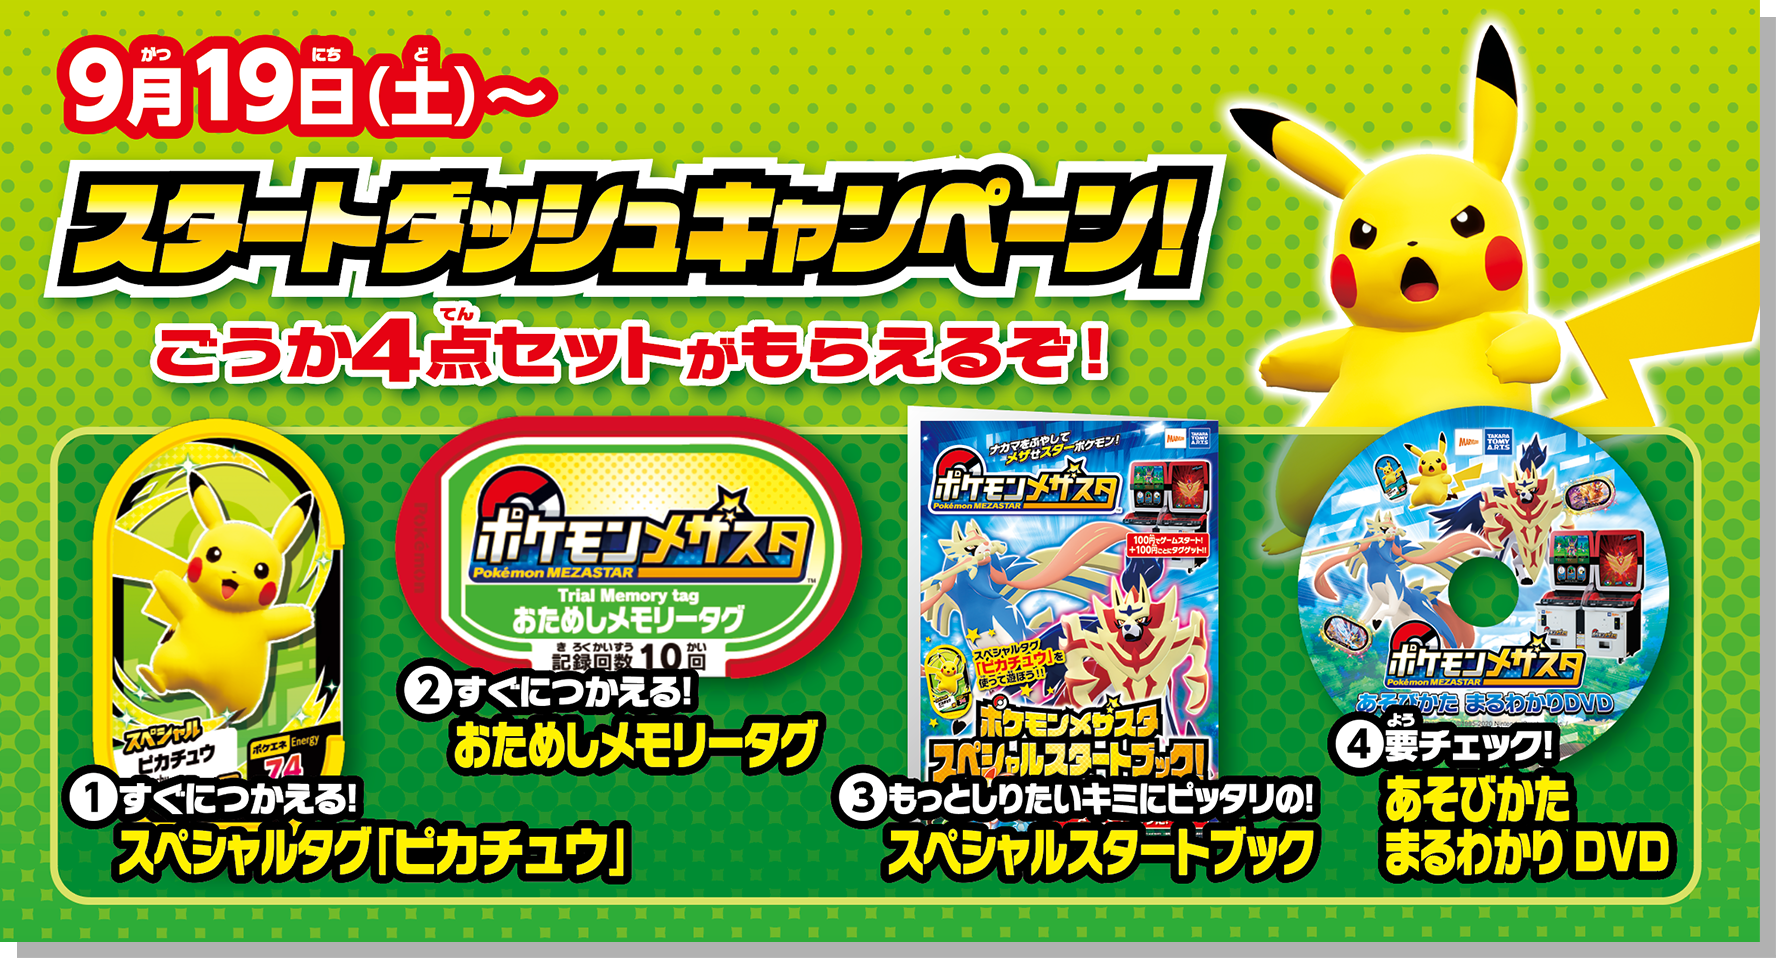 Pokémon MEZASTAR STAR Promotional Starter Set